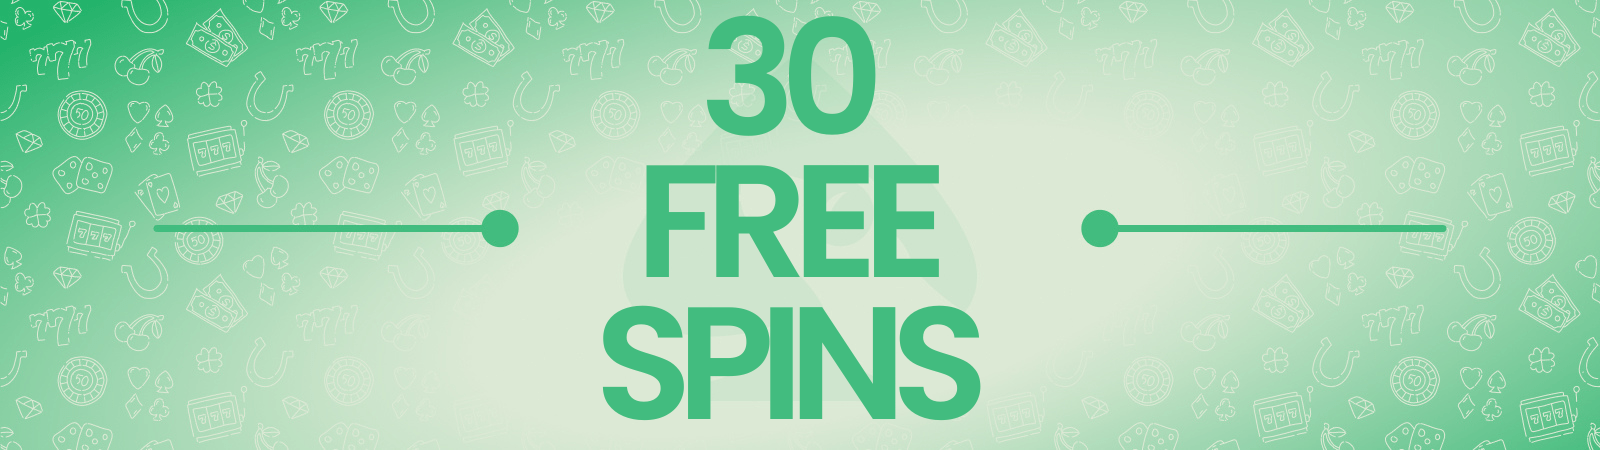  30 free spins no deposit required uk